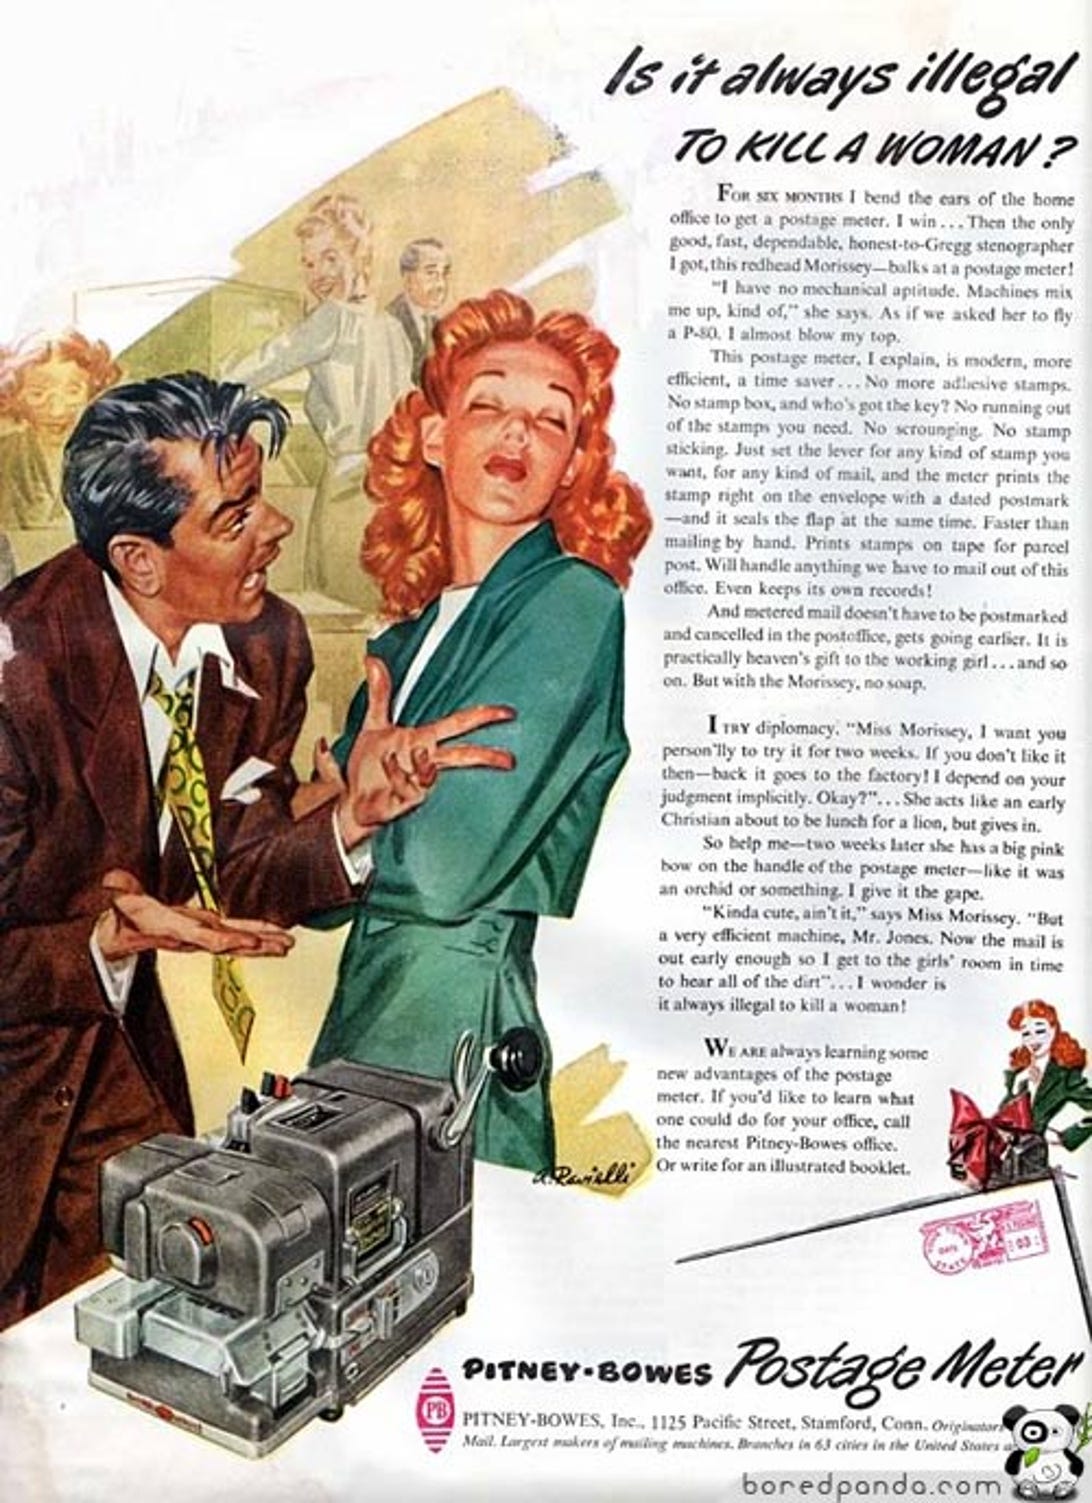 s-vintage-ads-woman.jpg